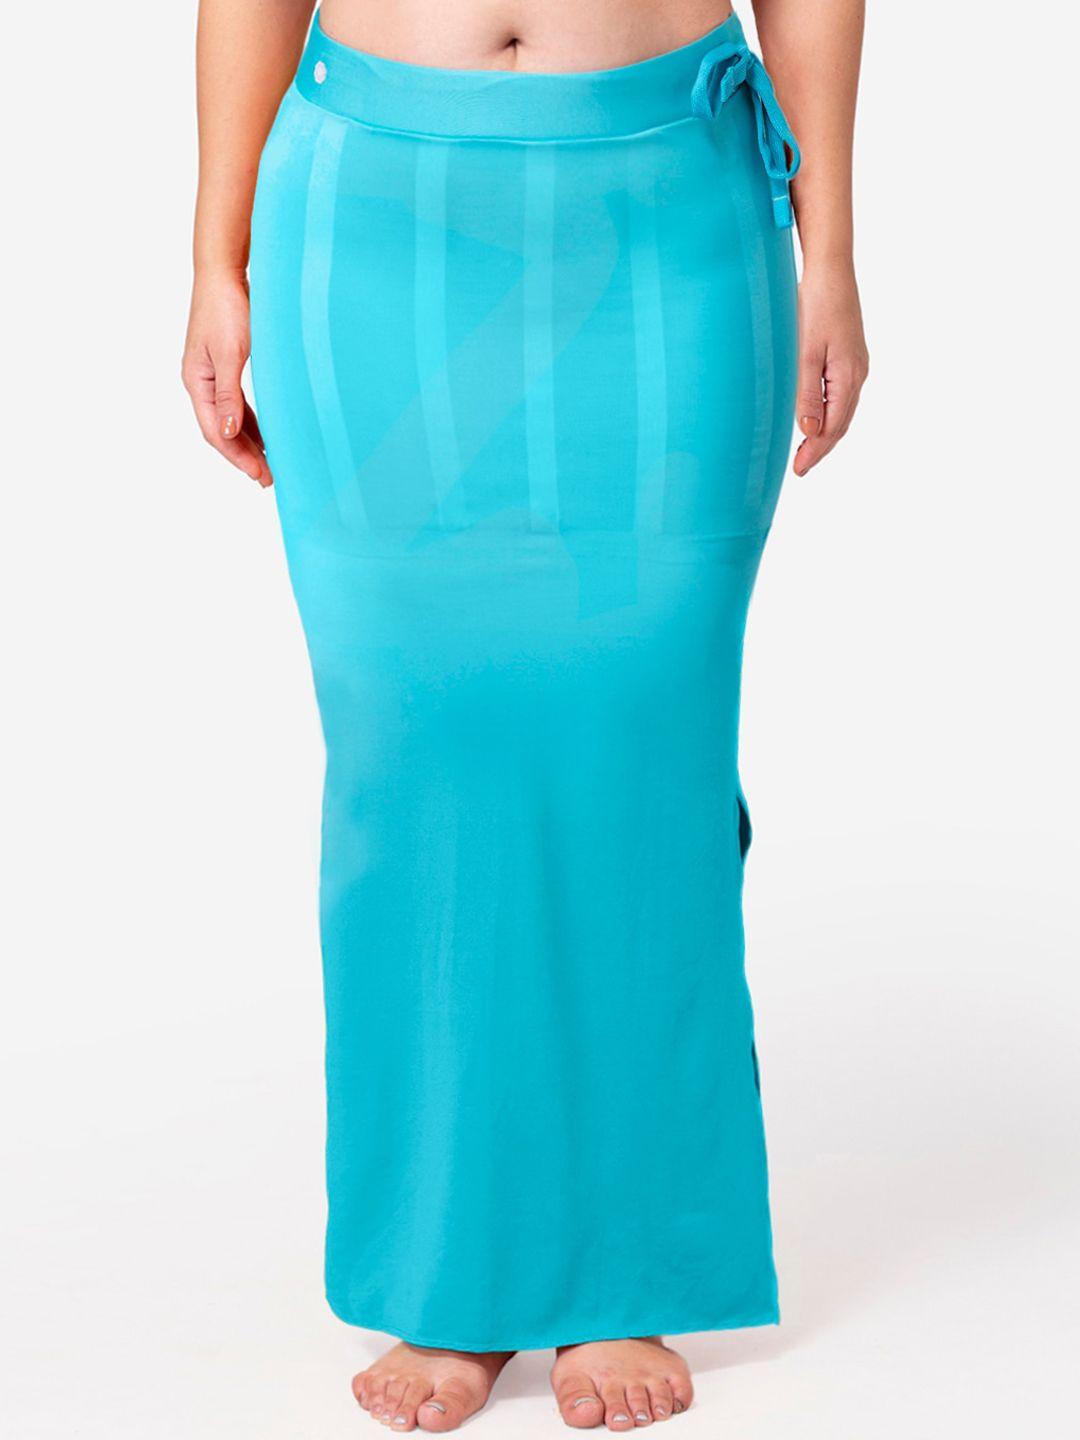 dermawear women's saree shapewear turquoise blue